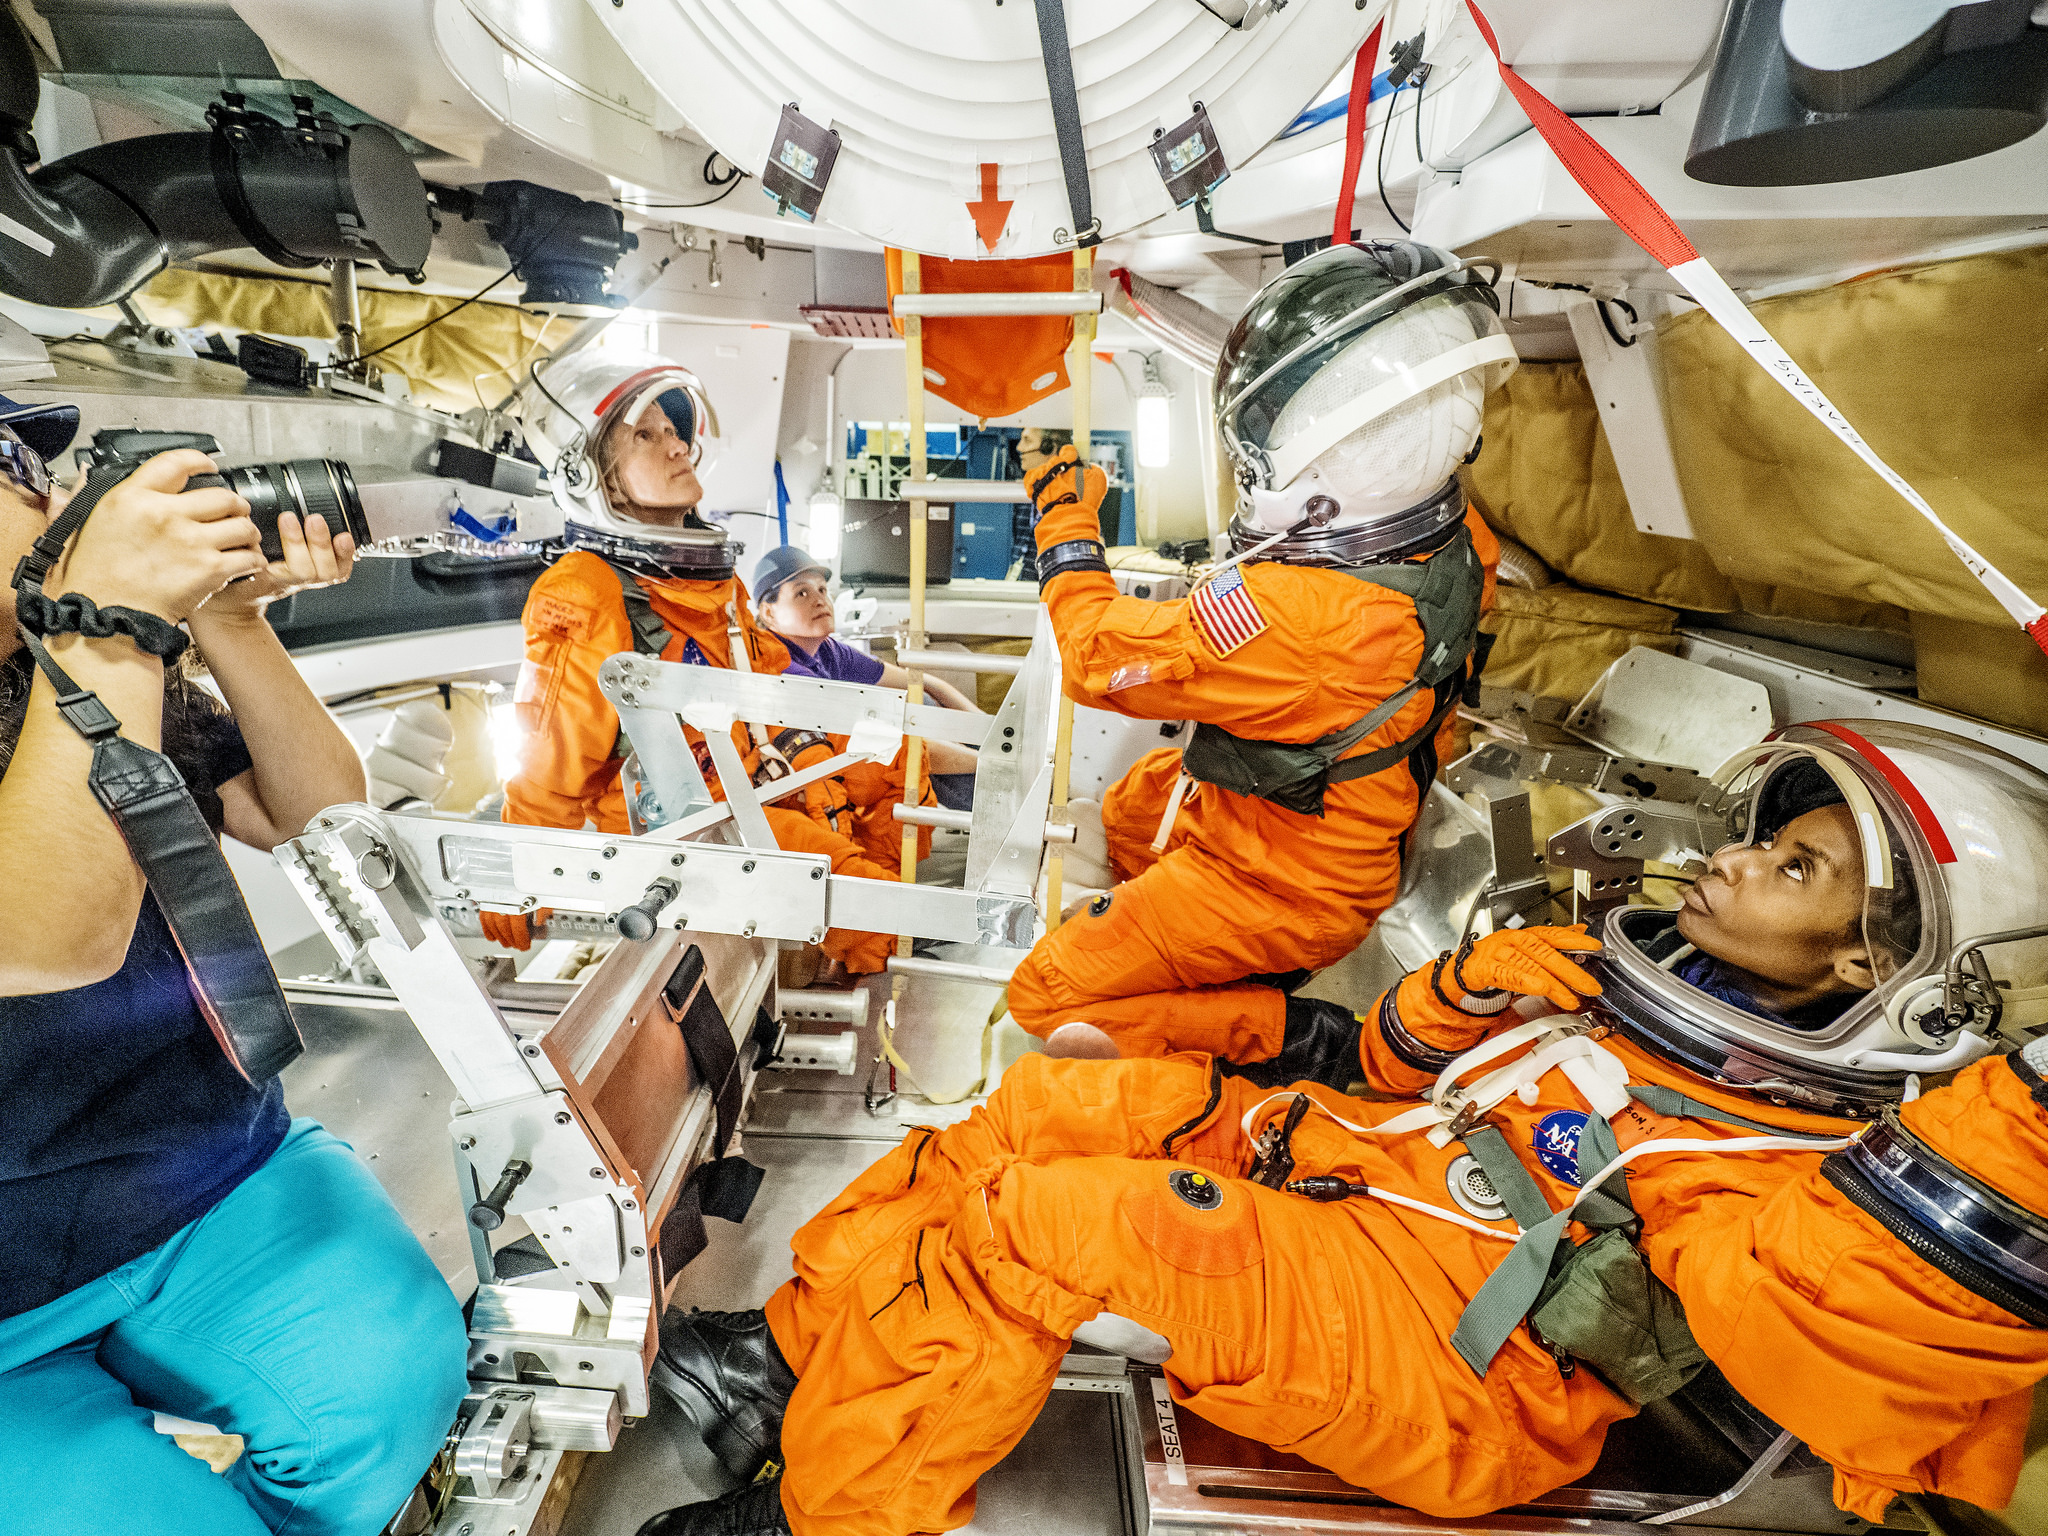 orion docking hatch evaluation johnson space center crew